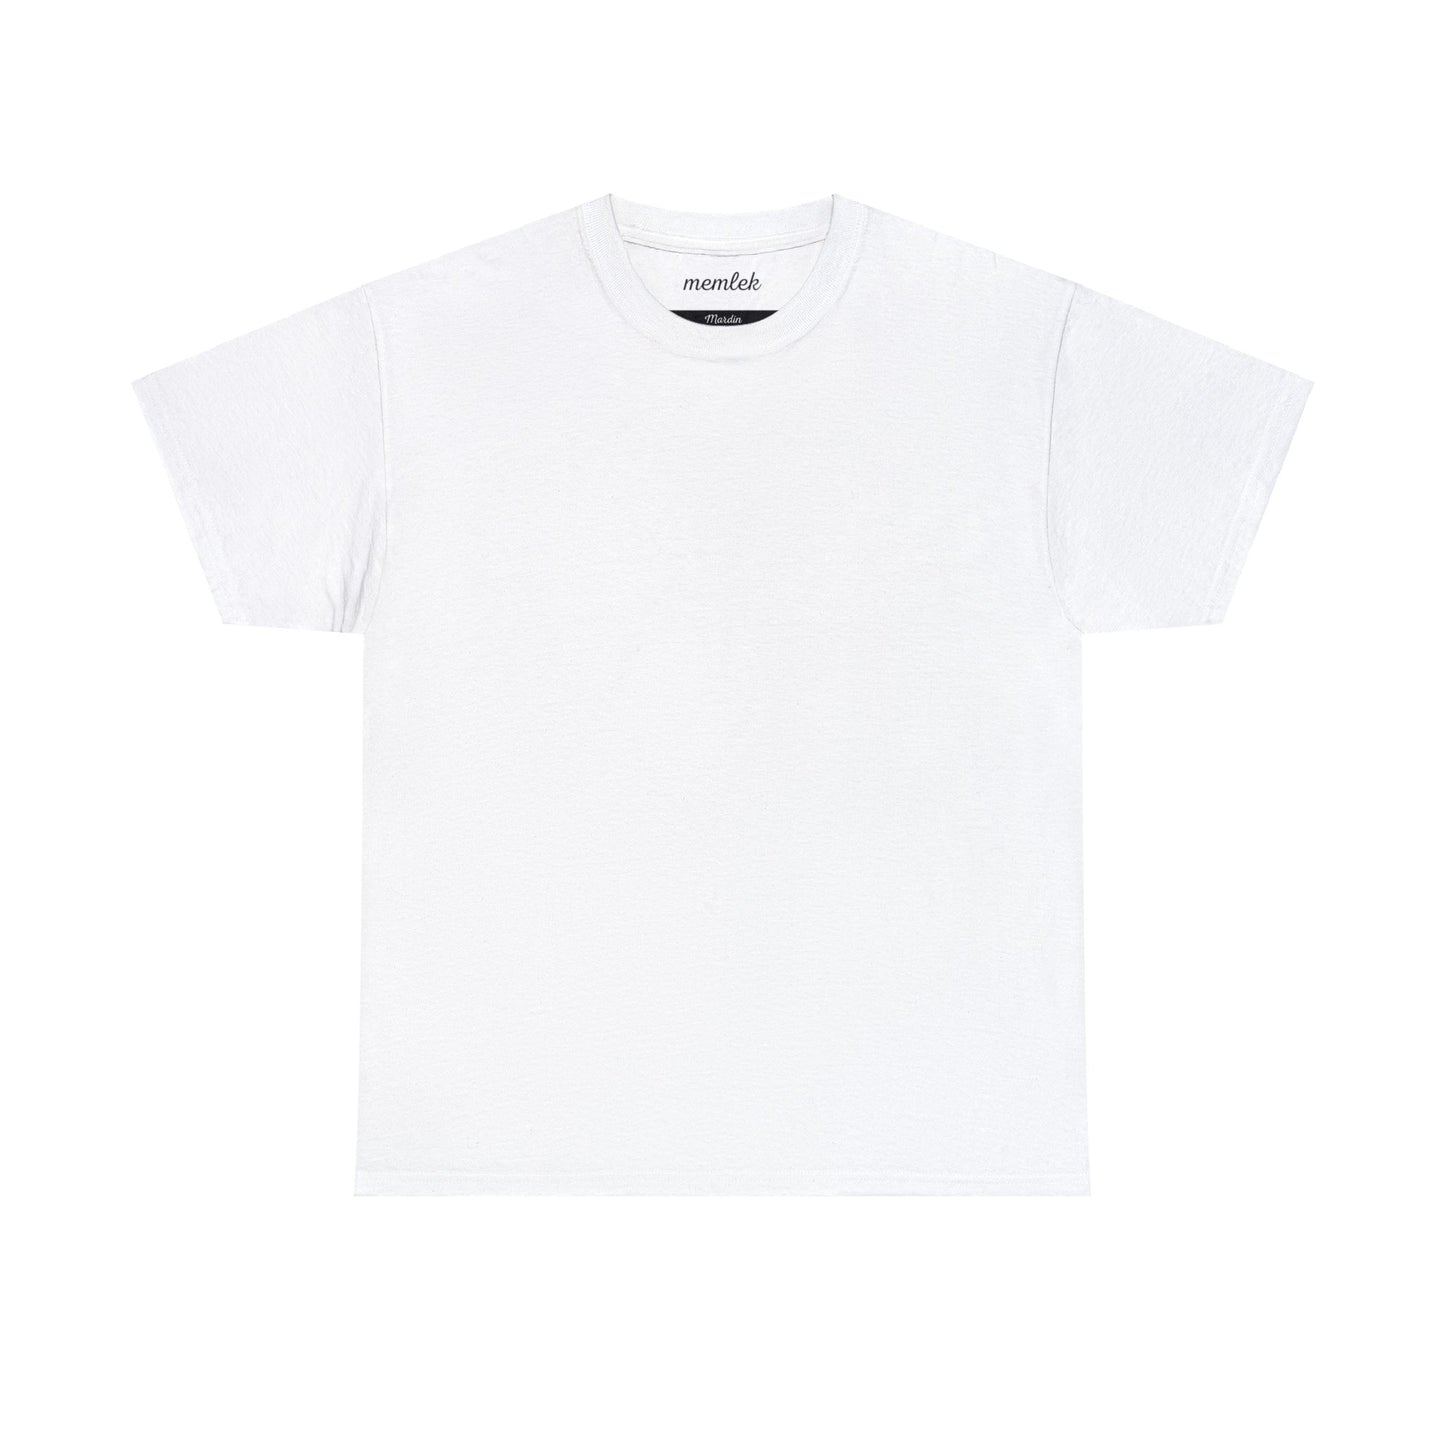 Kurt - 47 Mardin - T-Shirt - Back Print - Black/White